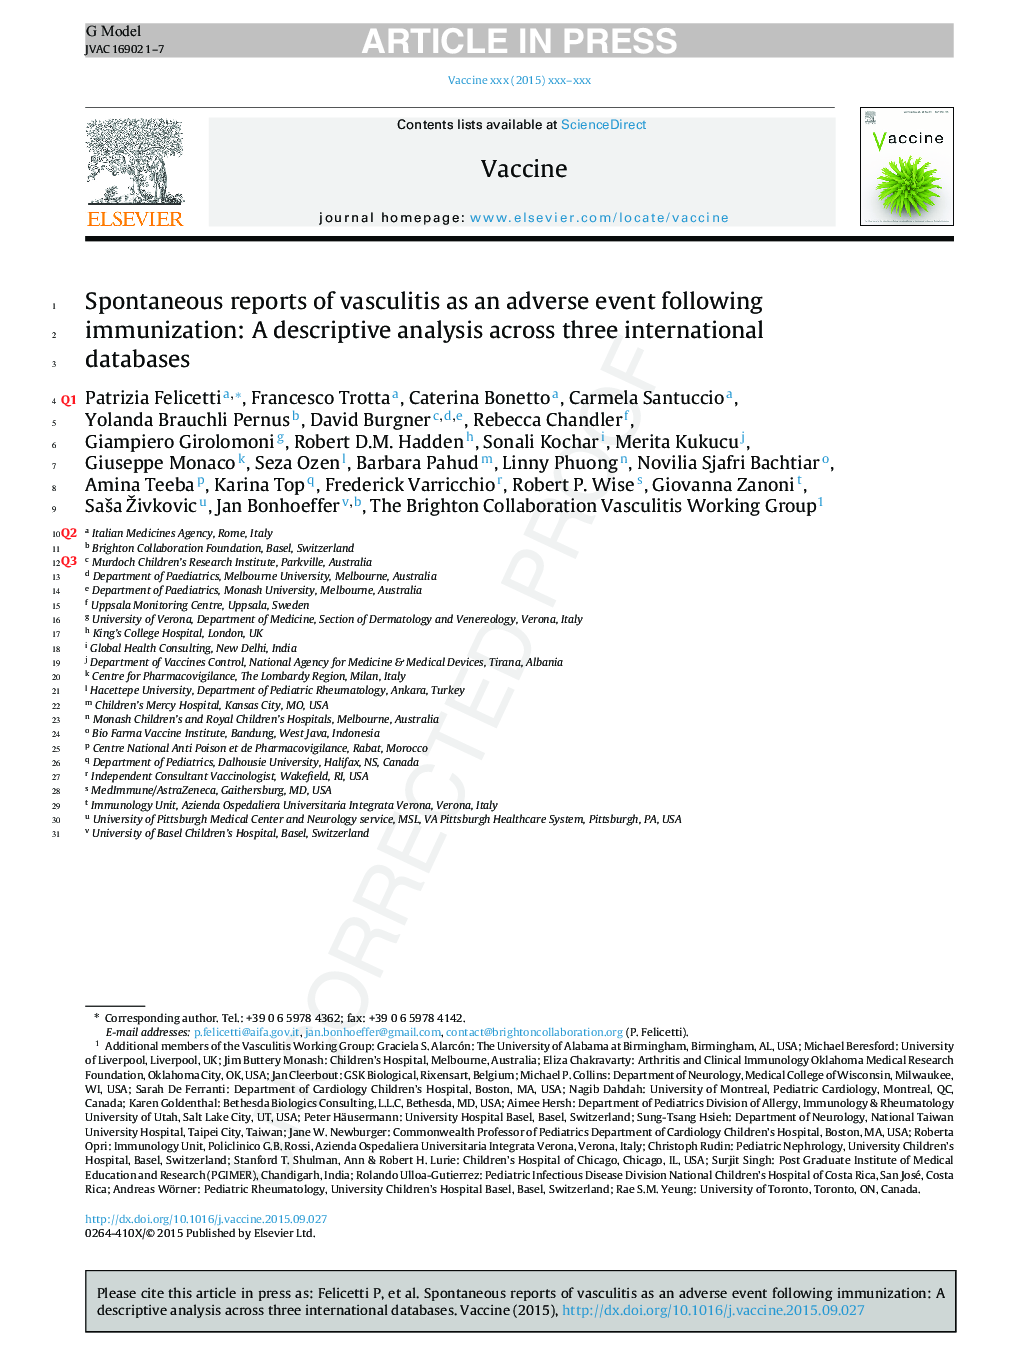 Spontaneous reports of vasculitis as an adverse event following immunization: A descriptive analysis across three international databases